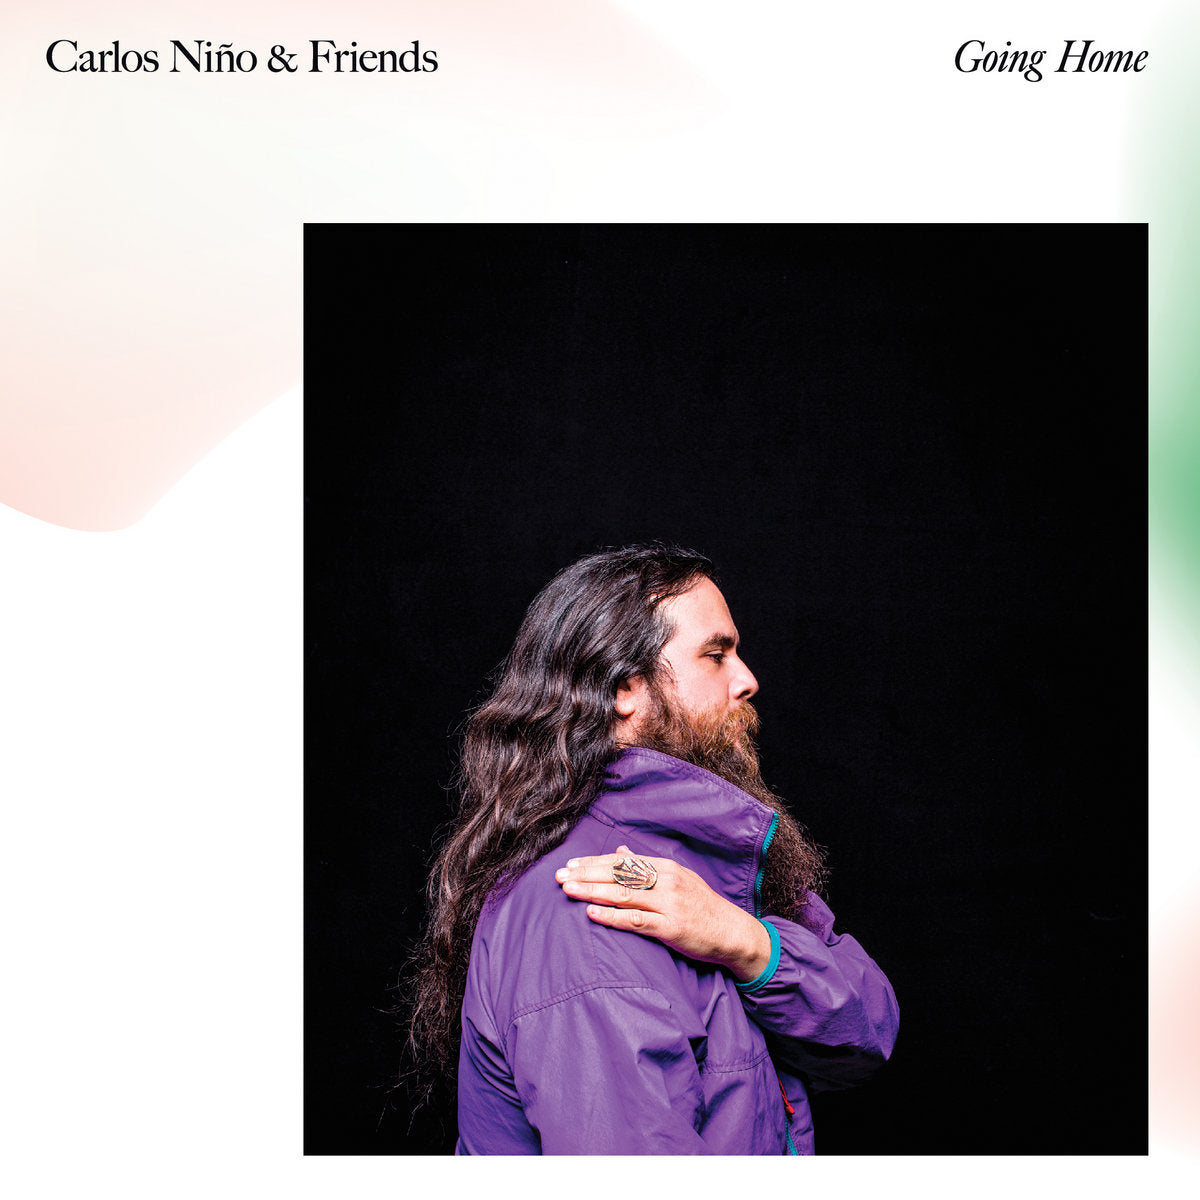 CARLOS NINO & FRIENDS - GOING HOME Vinyl LP